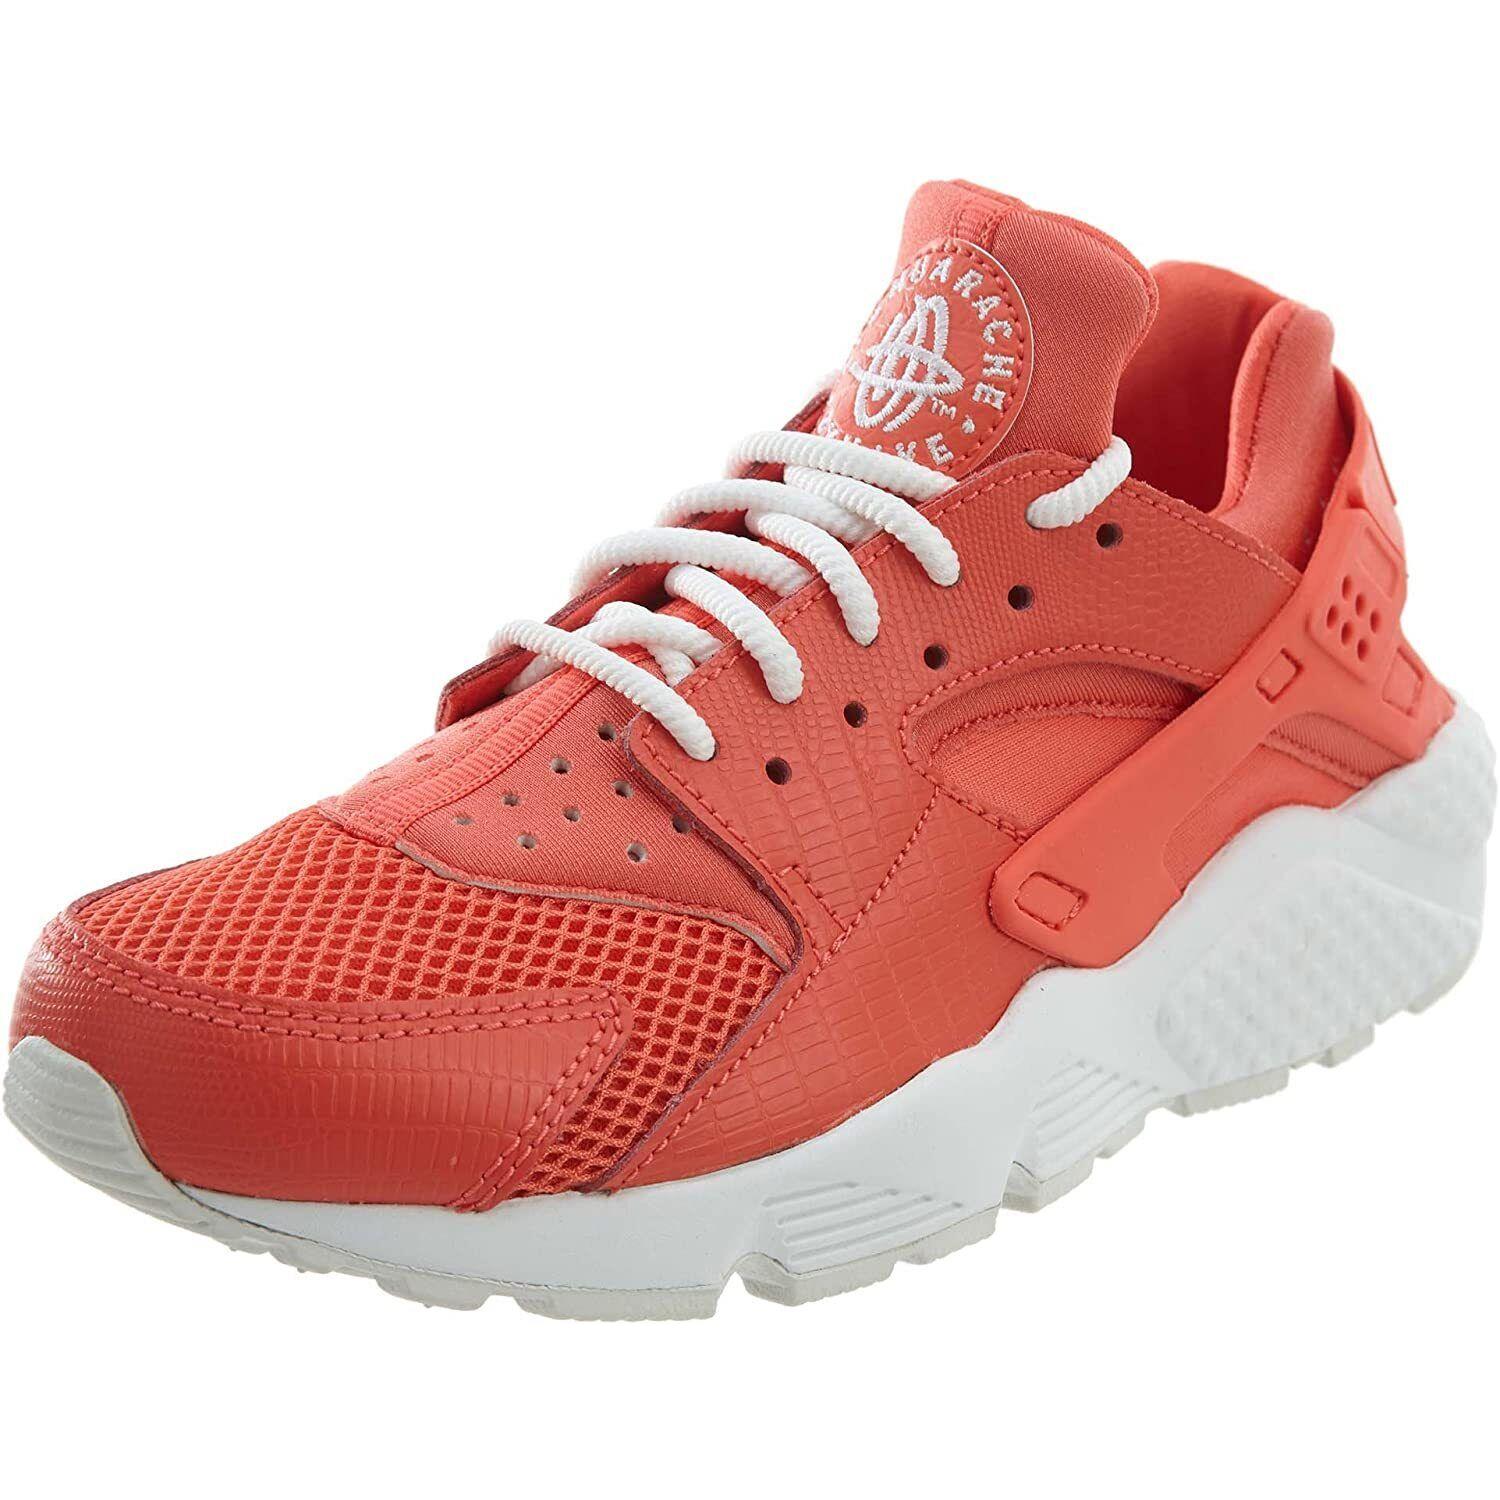 Nike Air Huarache Run SE Rush Coral Running Shoes Women Size